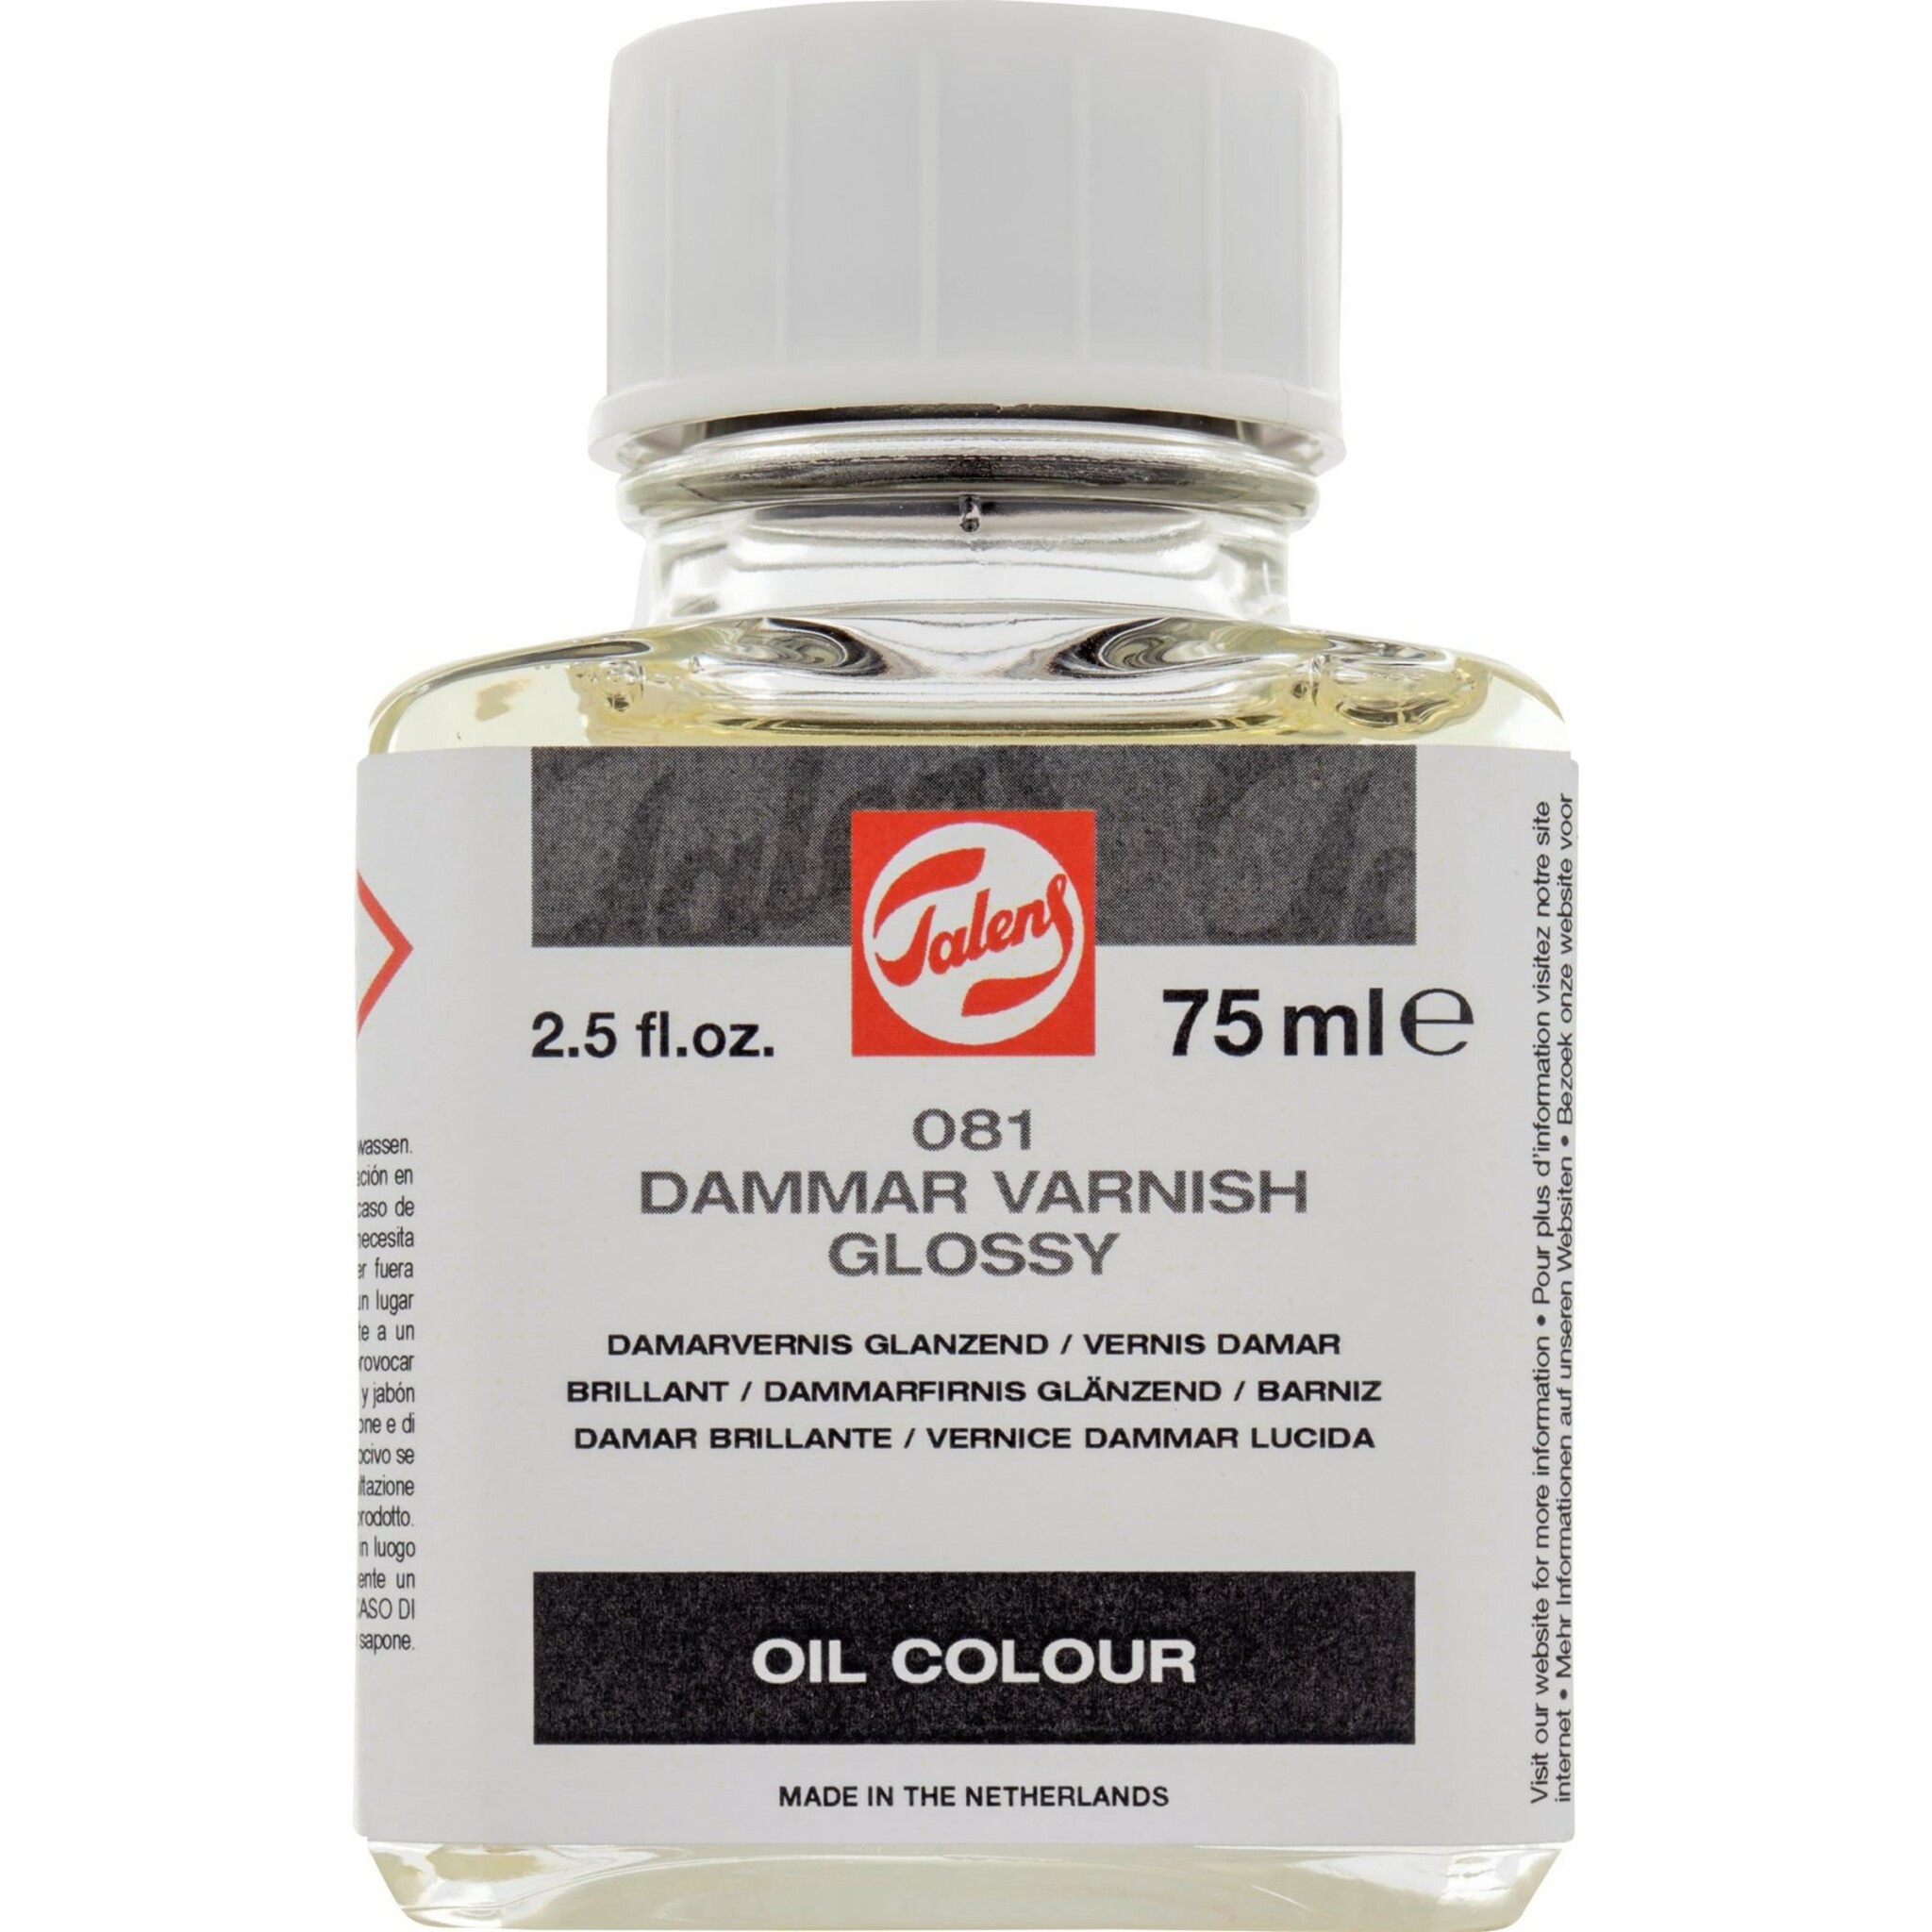 Talens-Dammar varnish gloss-081-75ml